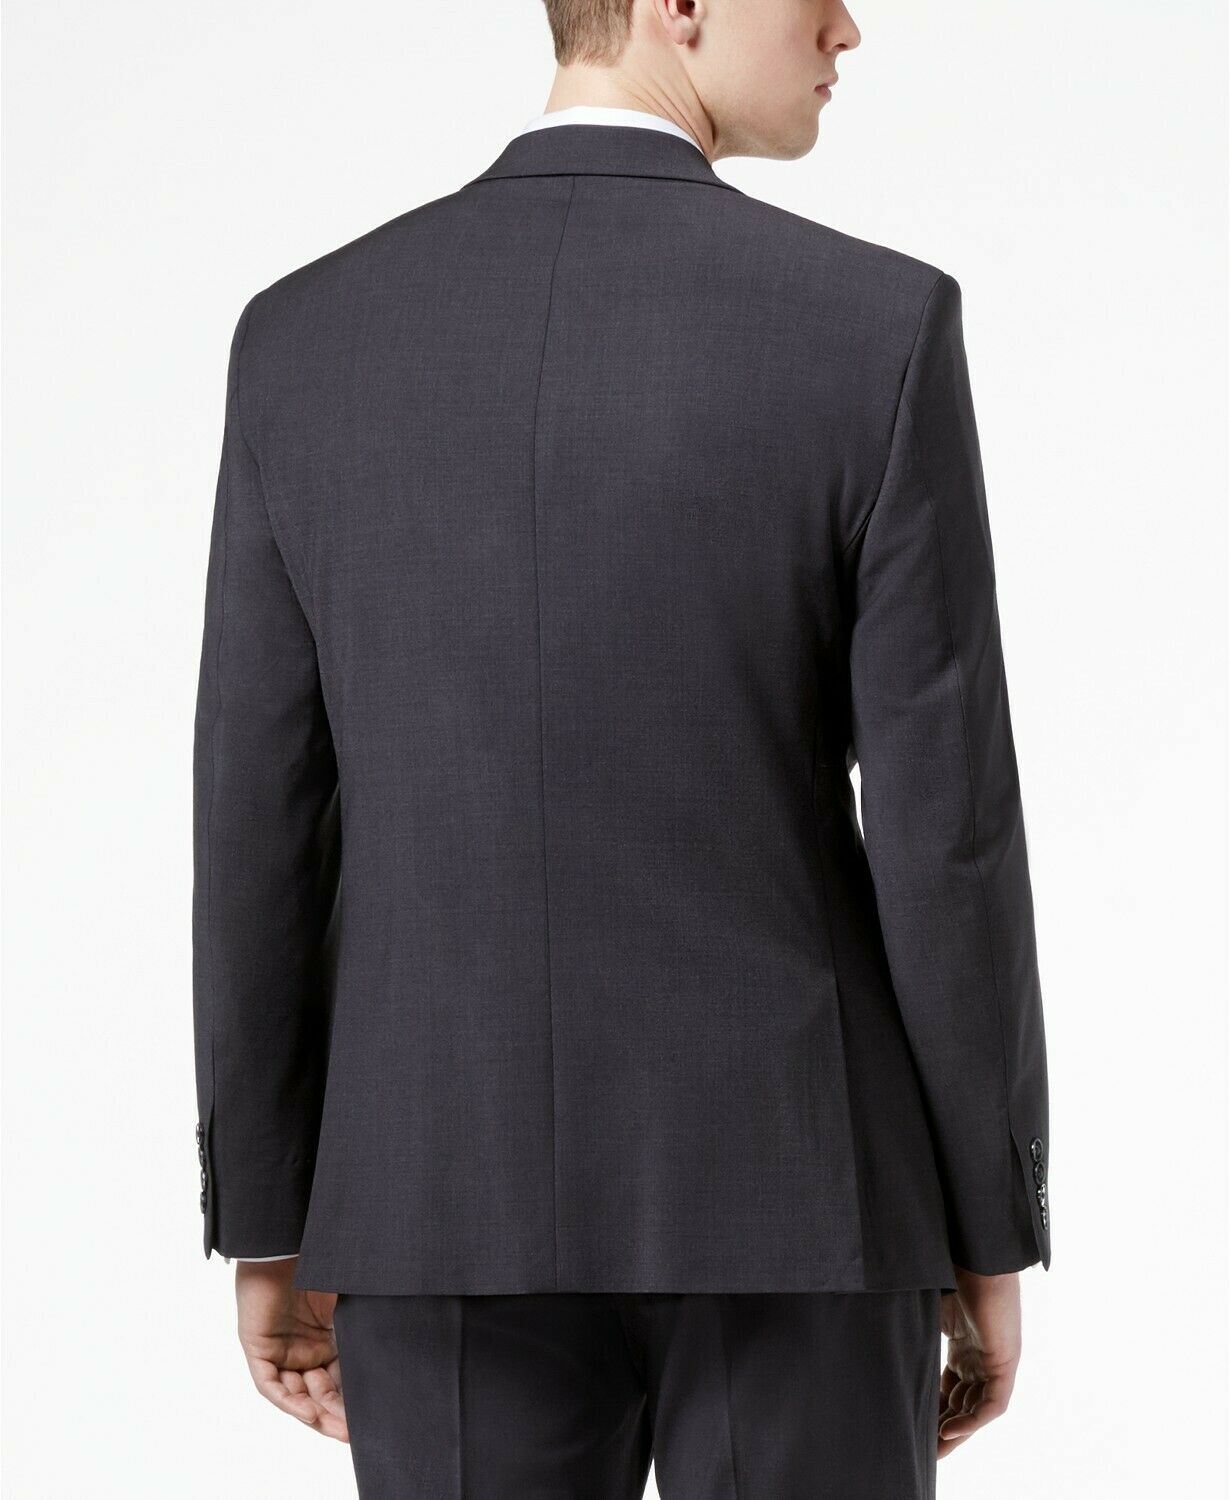 Calvin Klein Mens X-Fit Solid Slim Fit Suit Jacket 38R Charcoal Grey